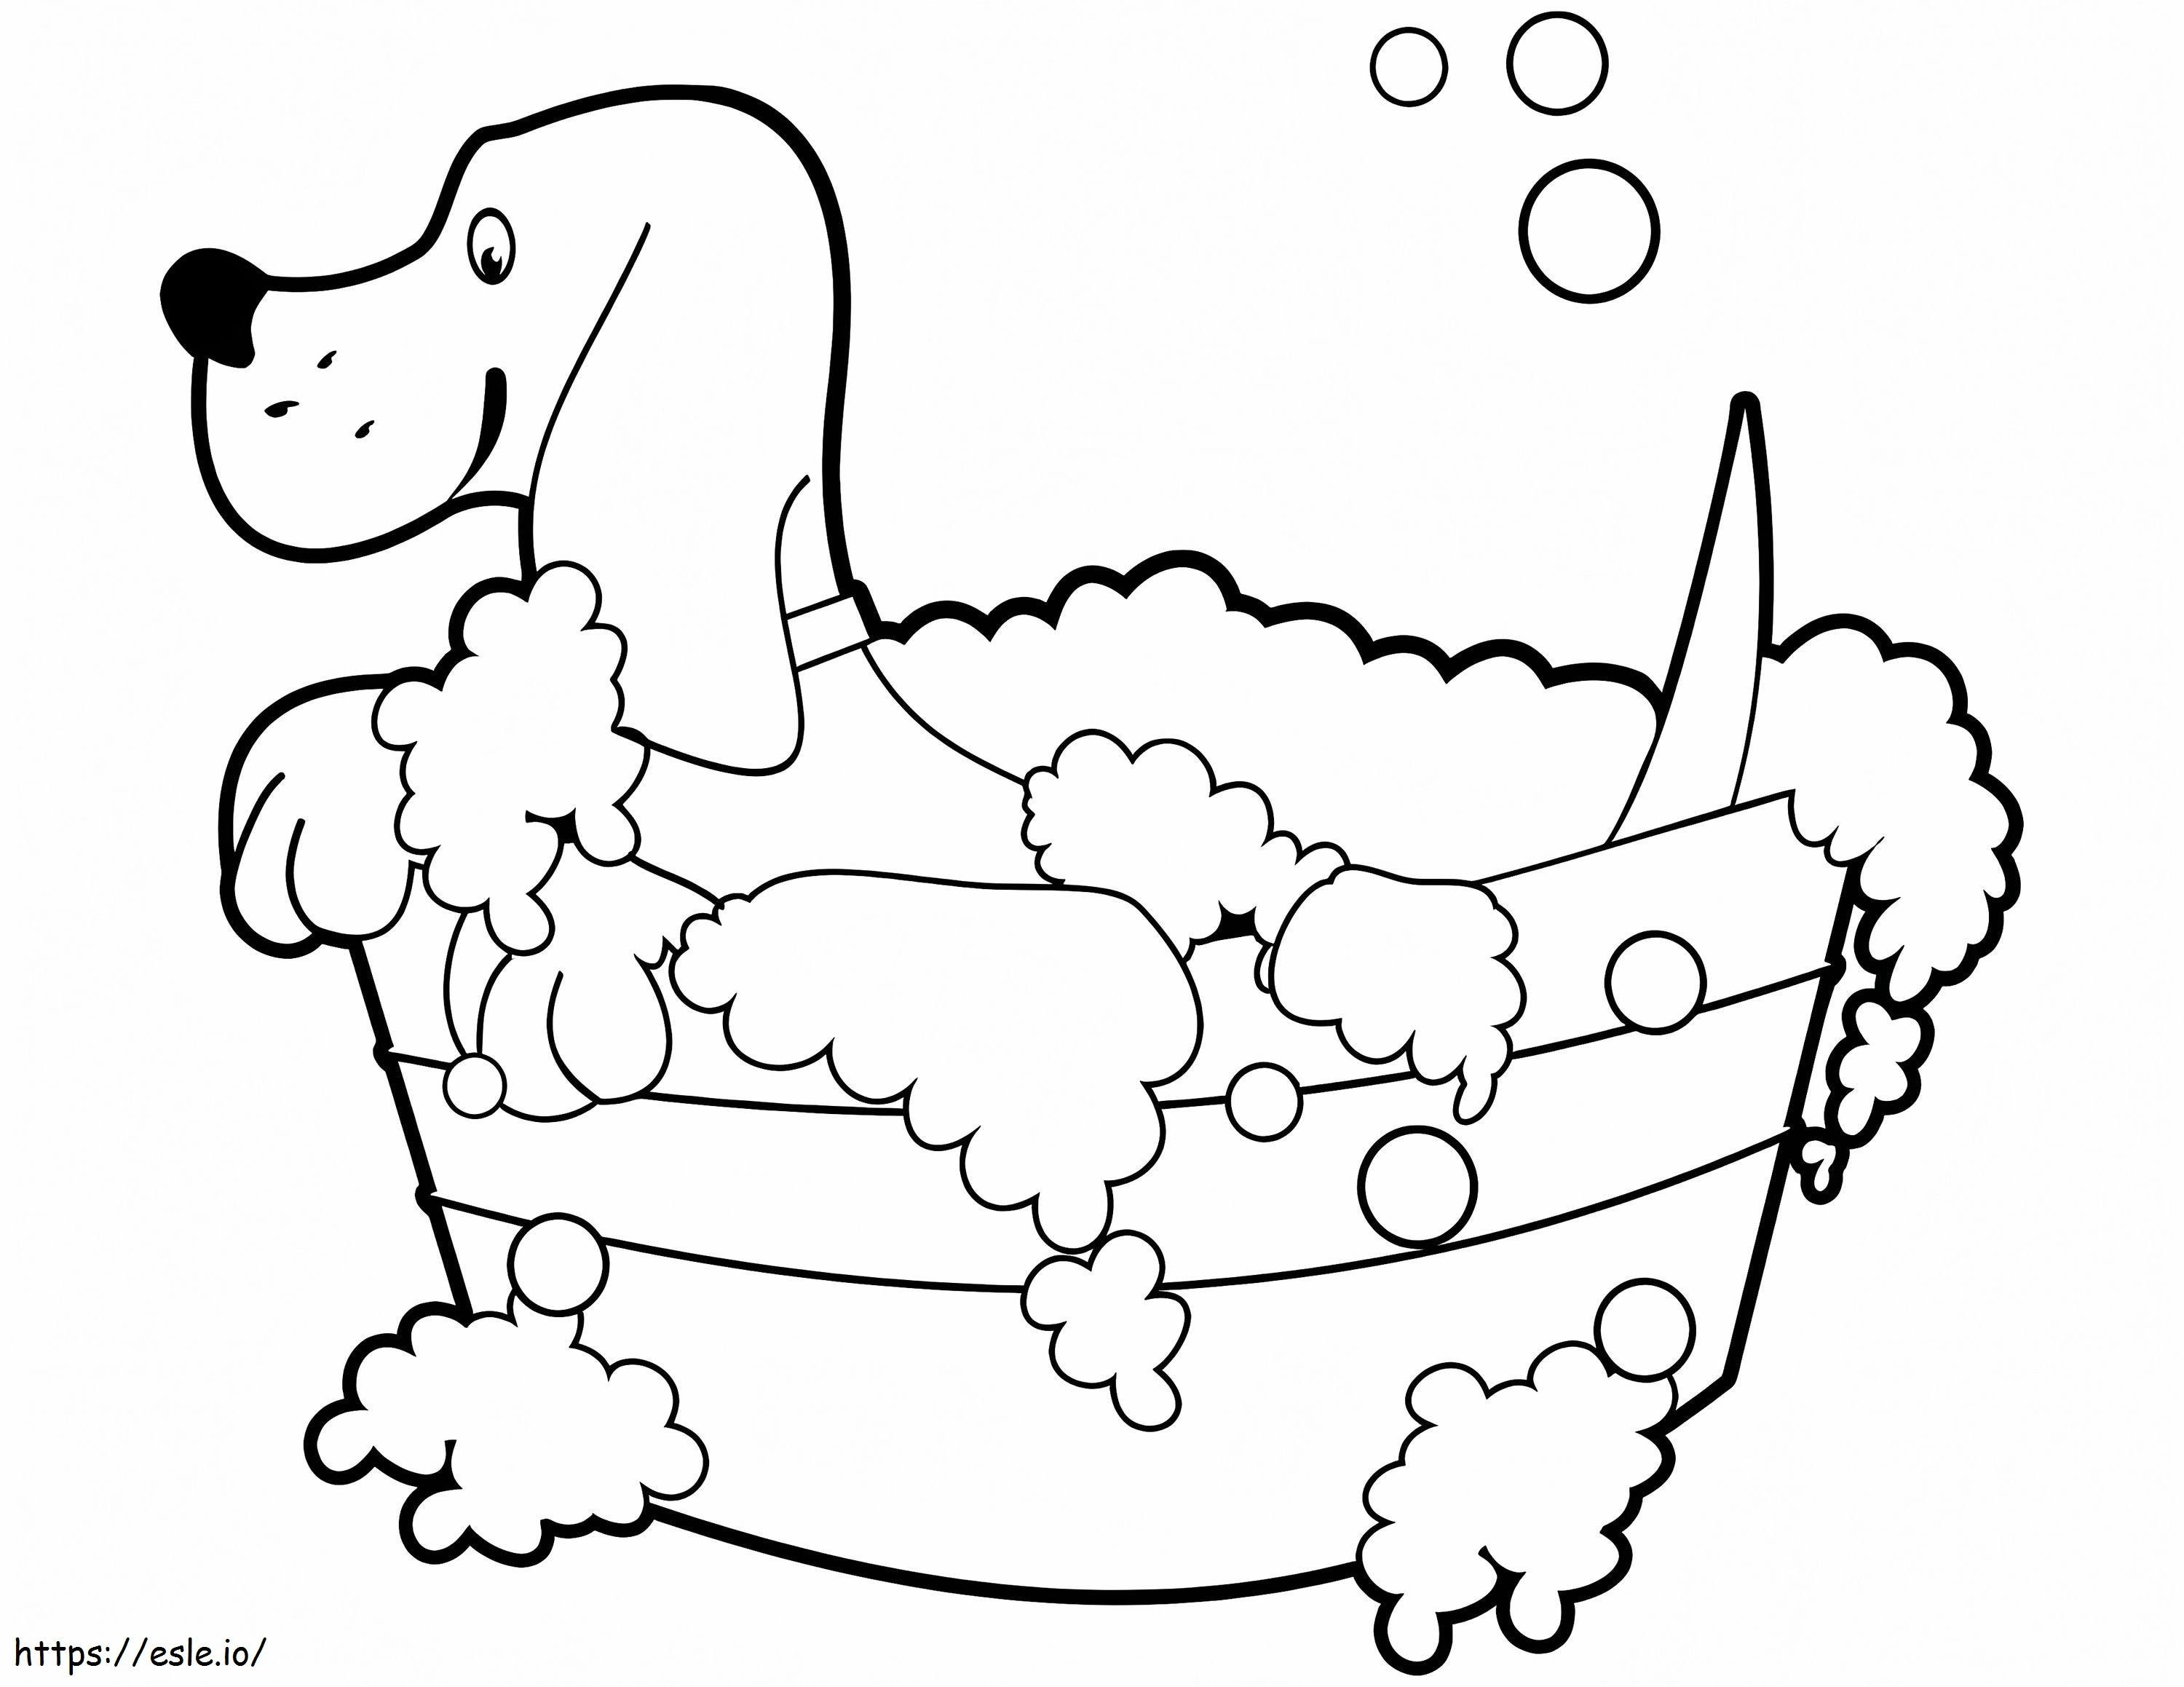 Coloriage Beagle prenant son bain à imprimer dessin